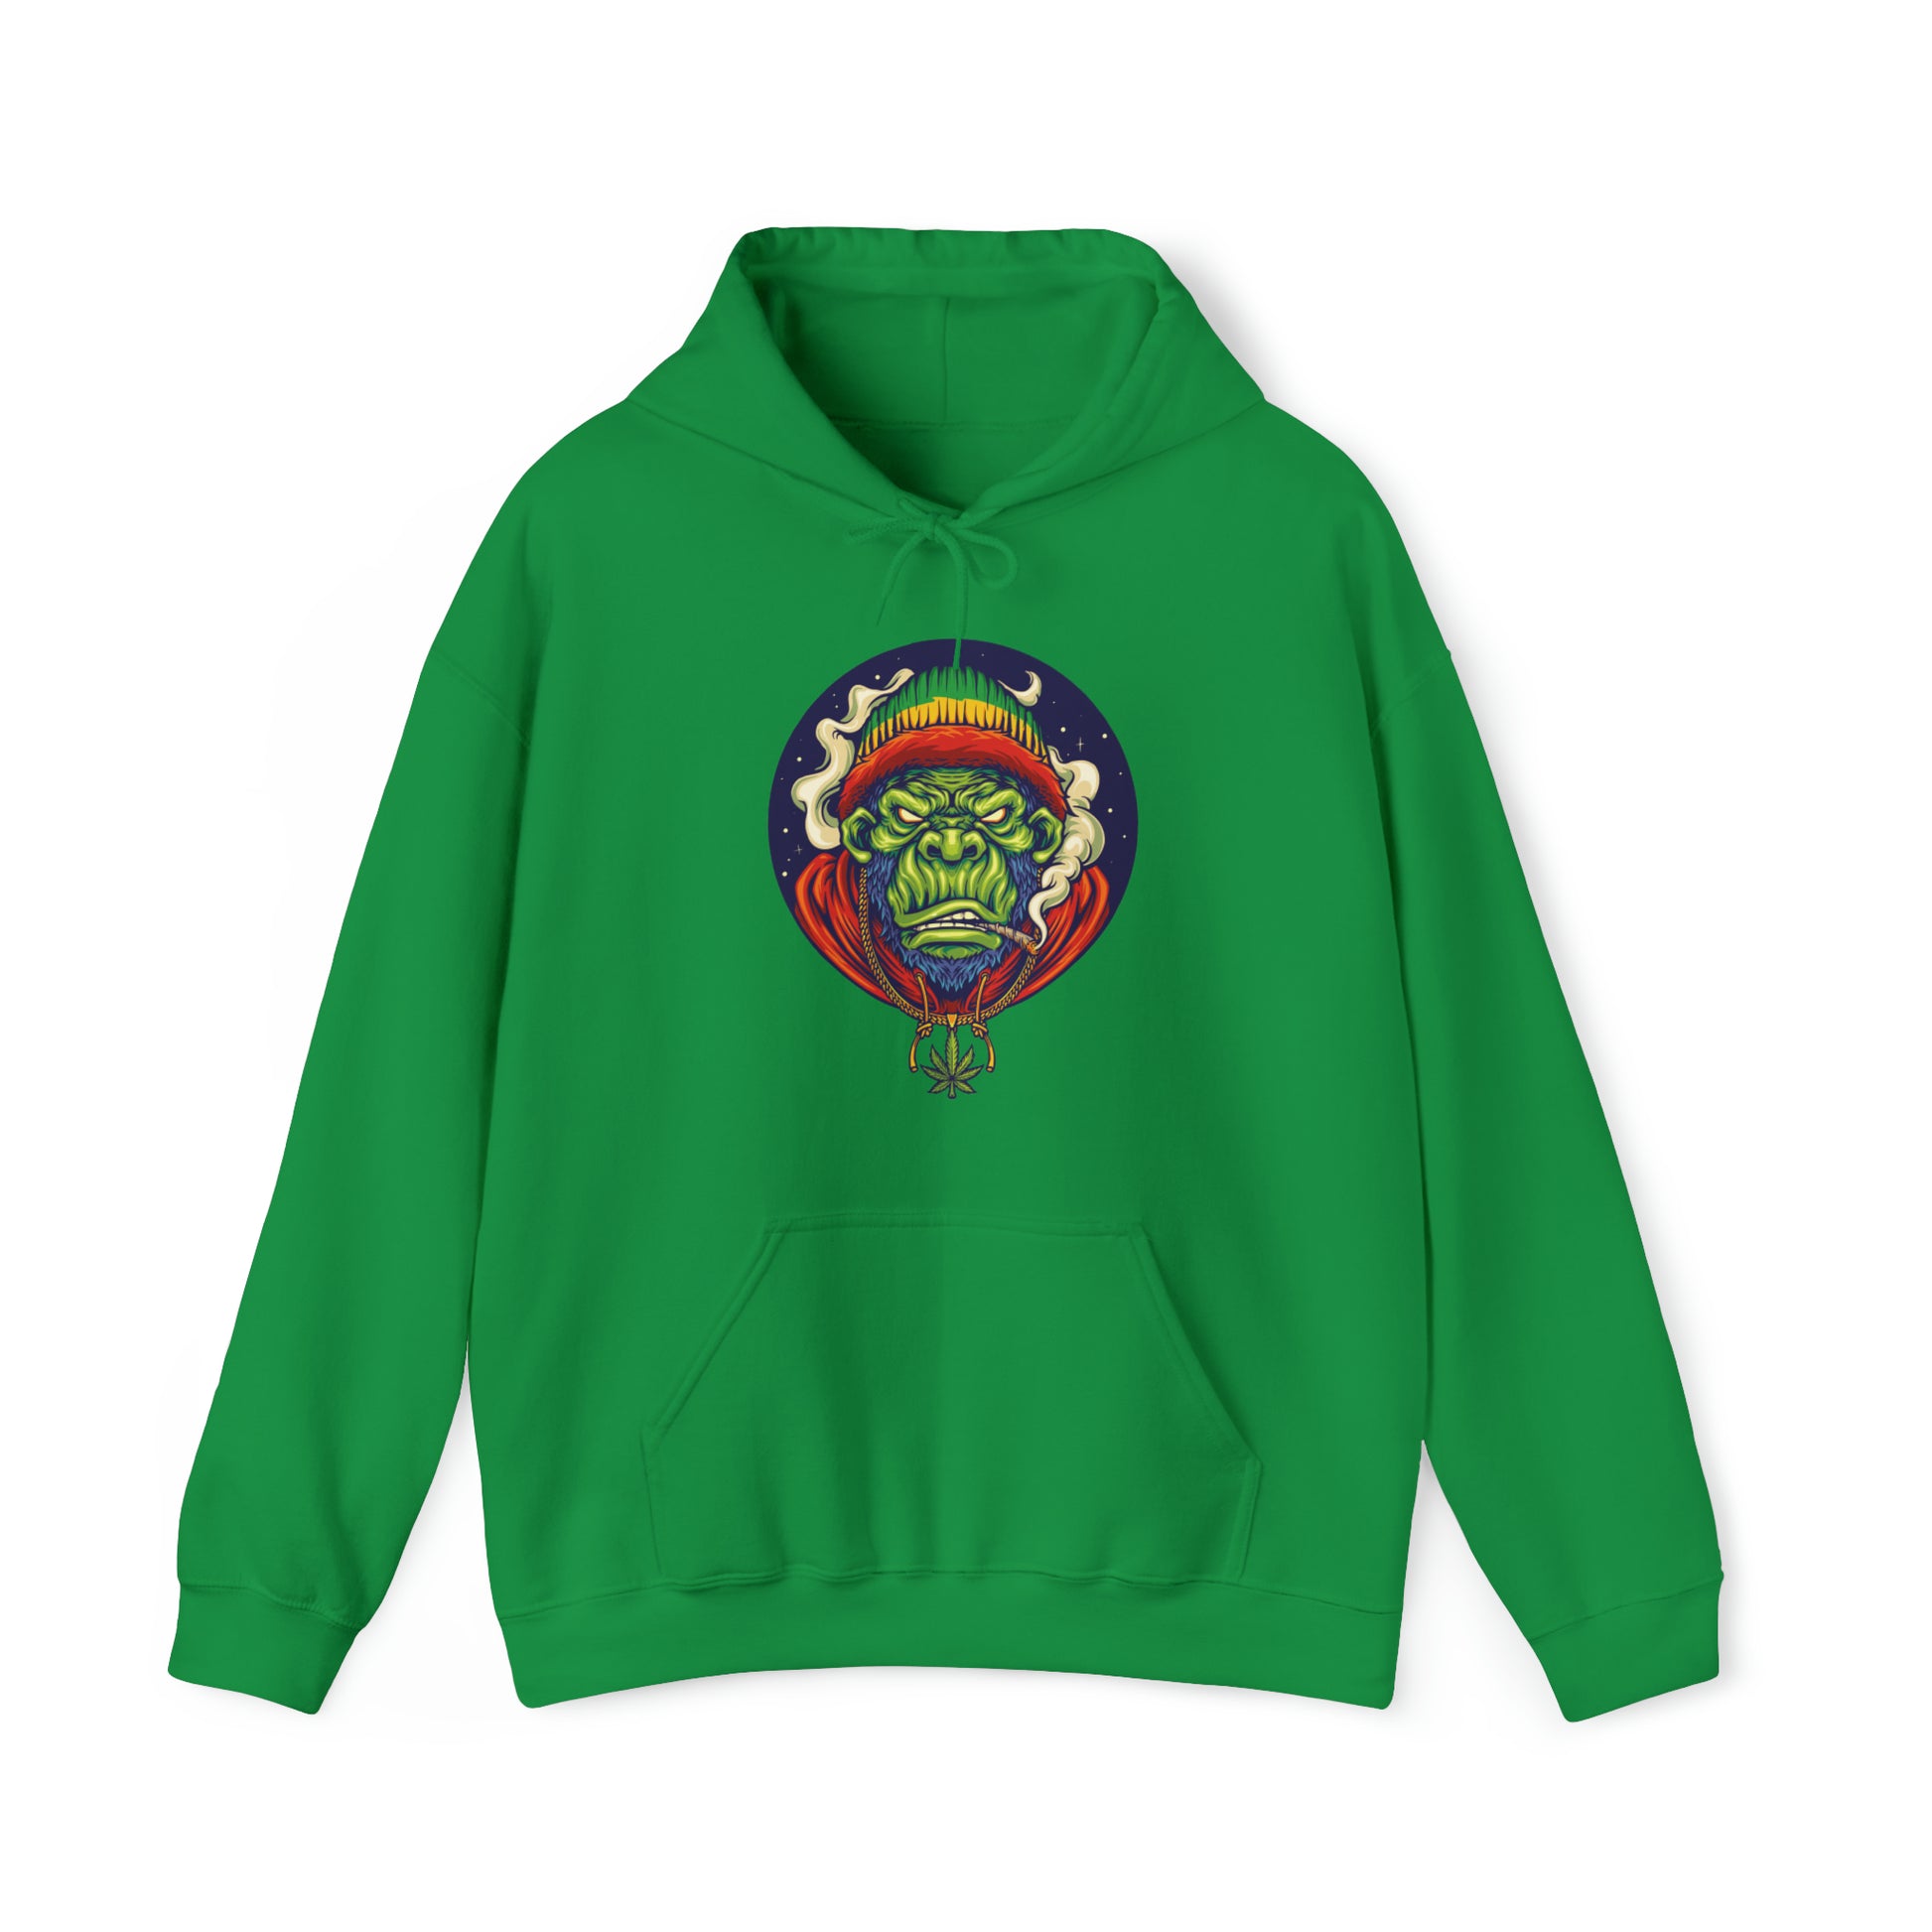 Rasta street style Reggae fashion trends Jamaican clothing Bob Marley apparel Reggae hoodies Rasta jackets Reggae-inspired activewear Rasta headwear Reggae tie-dye clothing Rasta patterned clothing